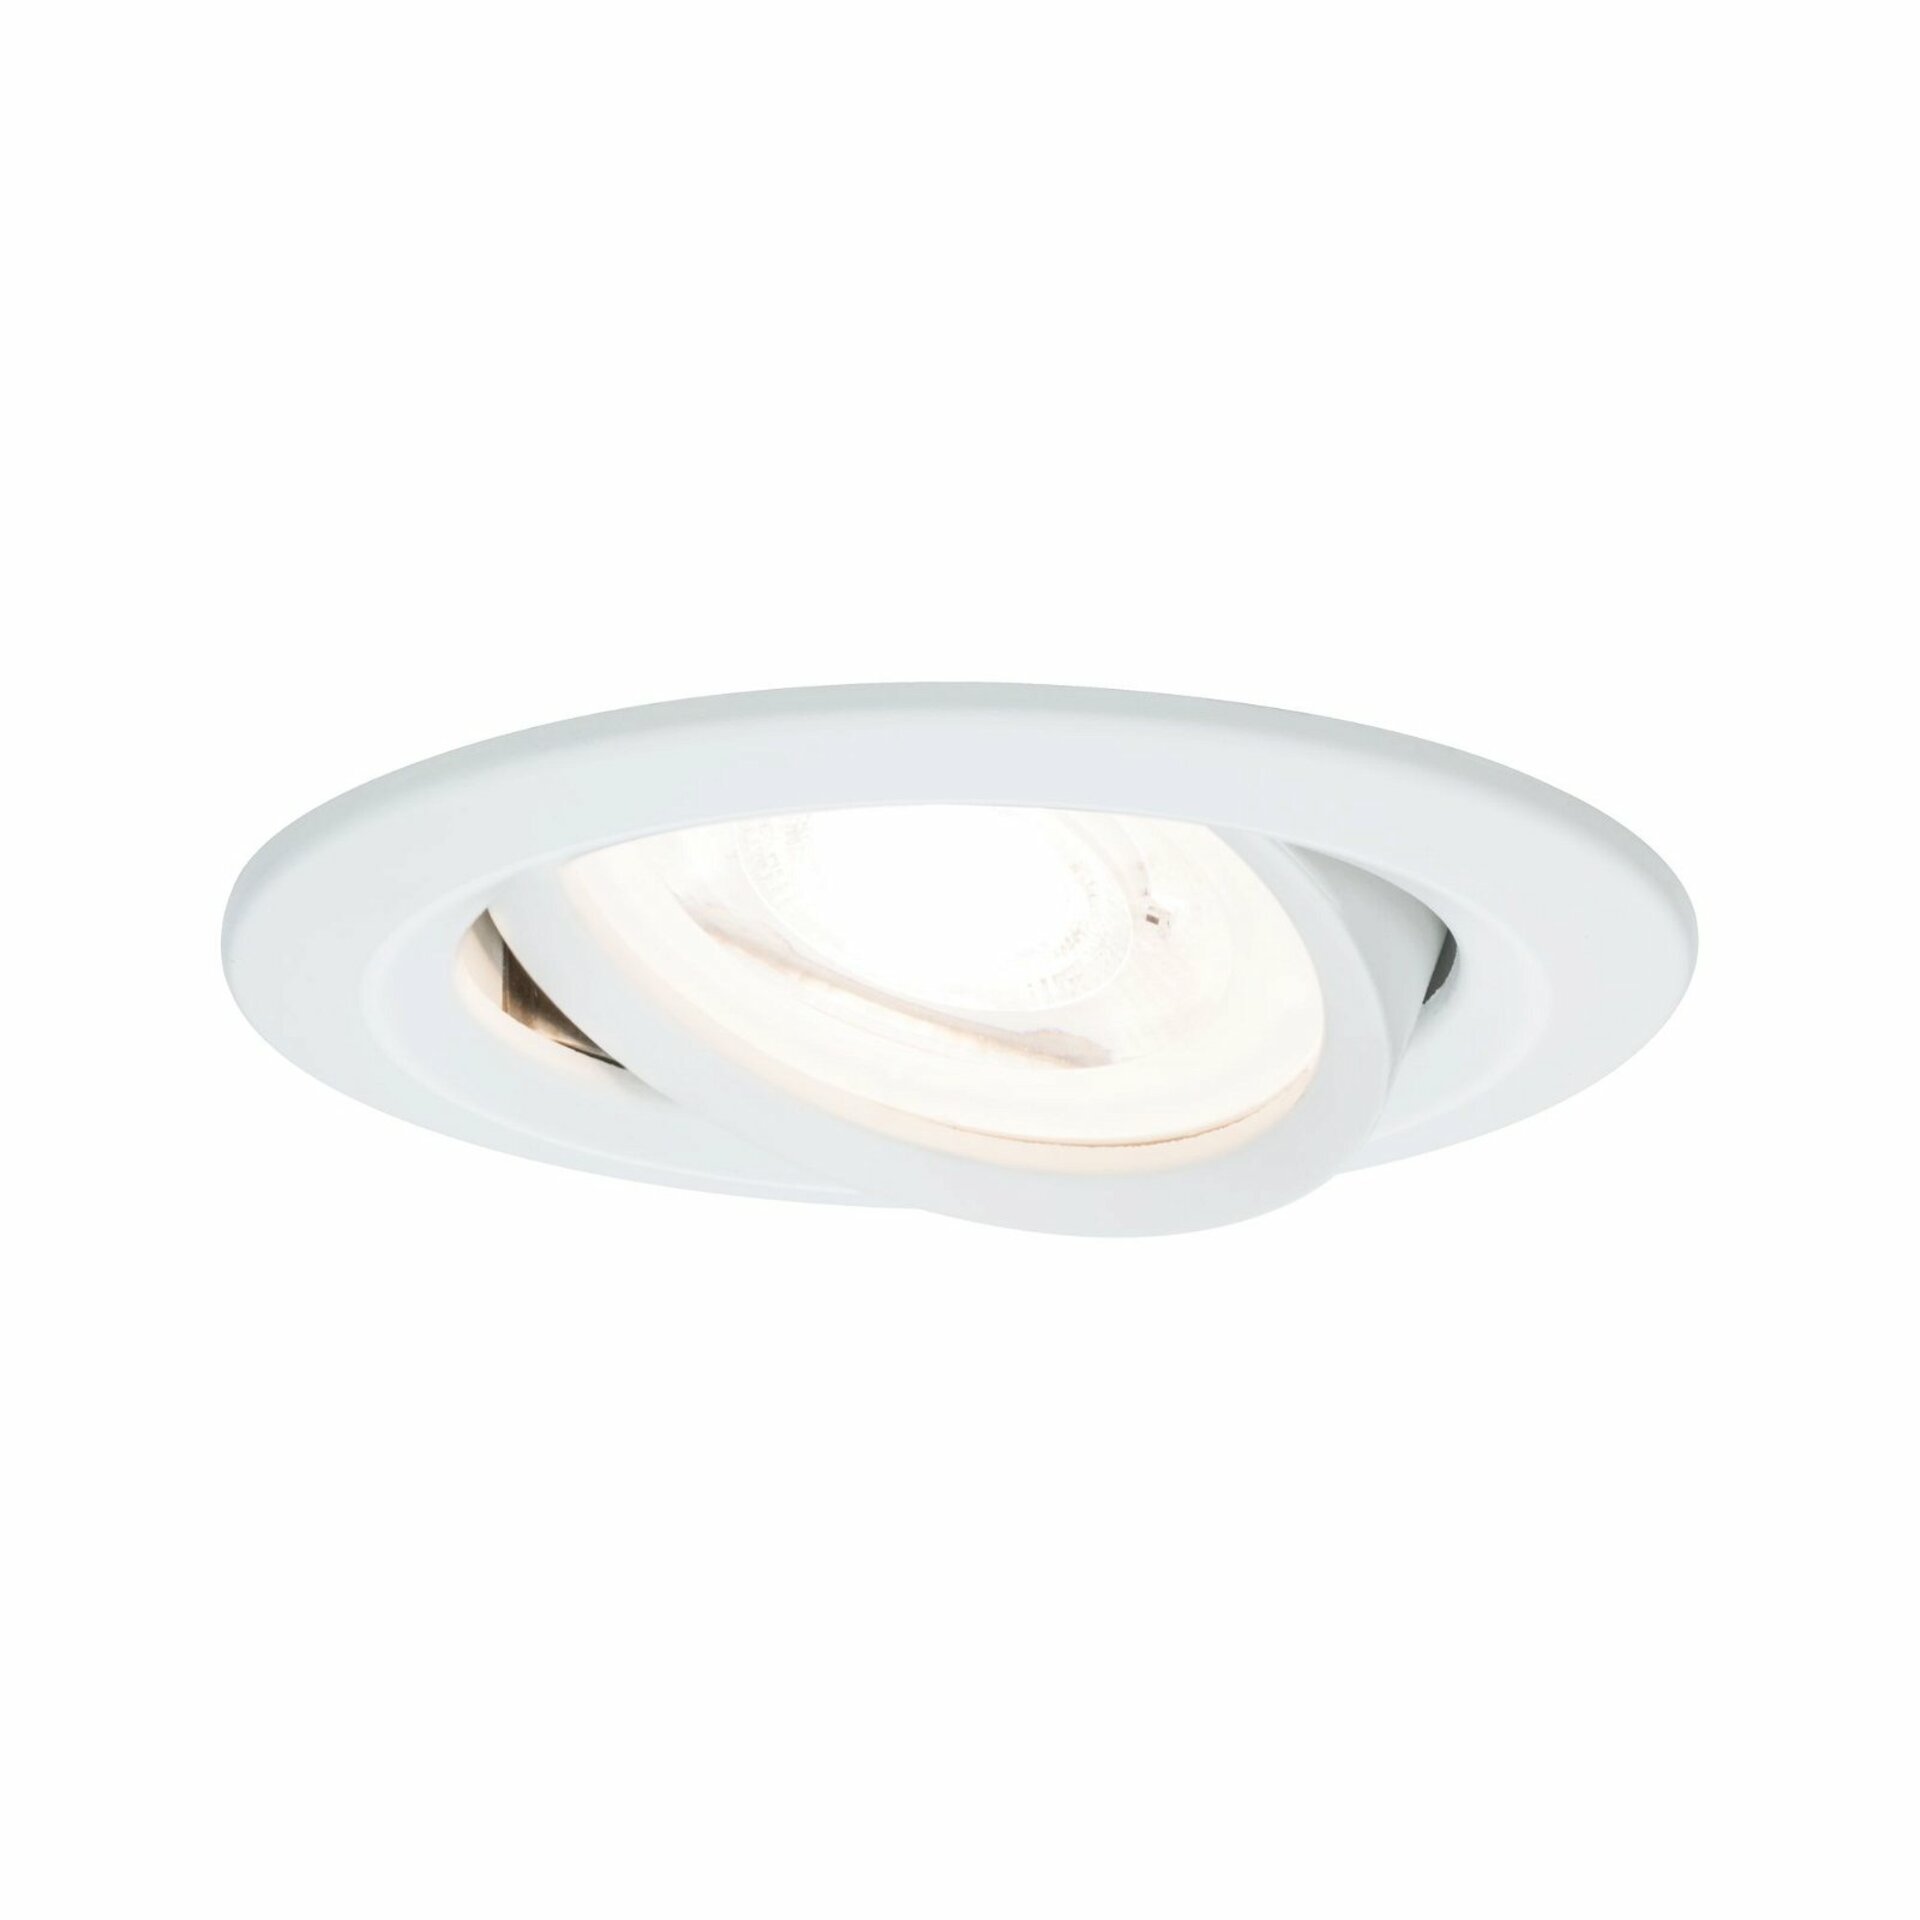 Paulmann vestavné svítidlo Nova kruhové bílá 1ks sada bez zdroje světla, max. 35W GU10 936.39 P 93639